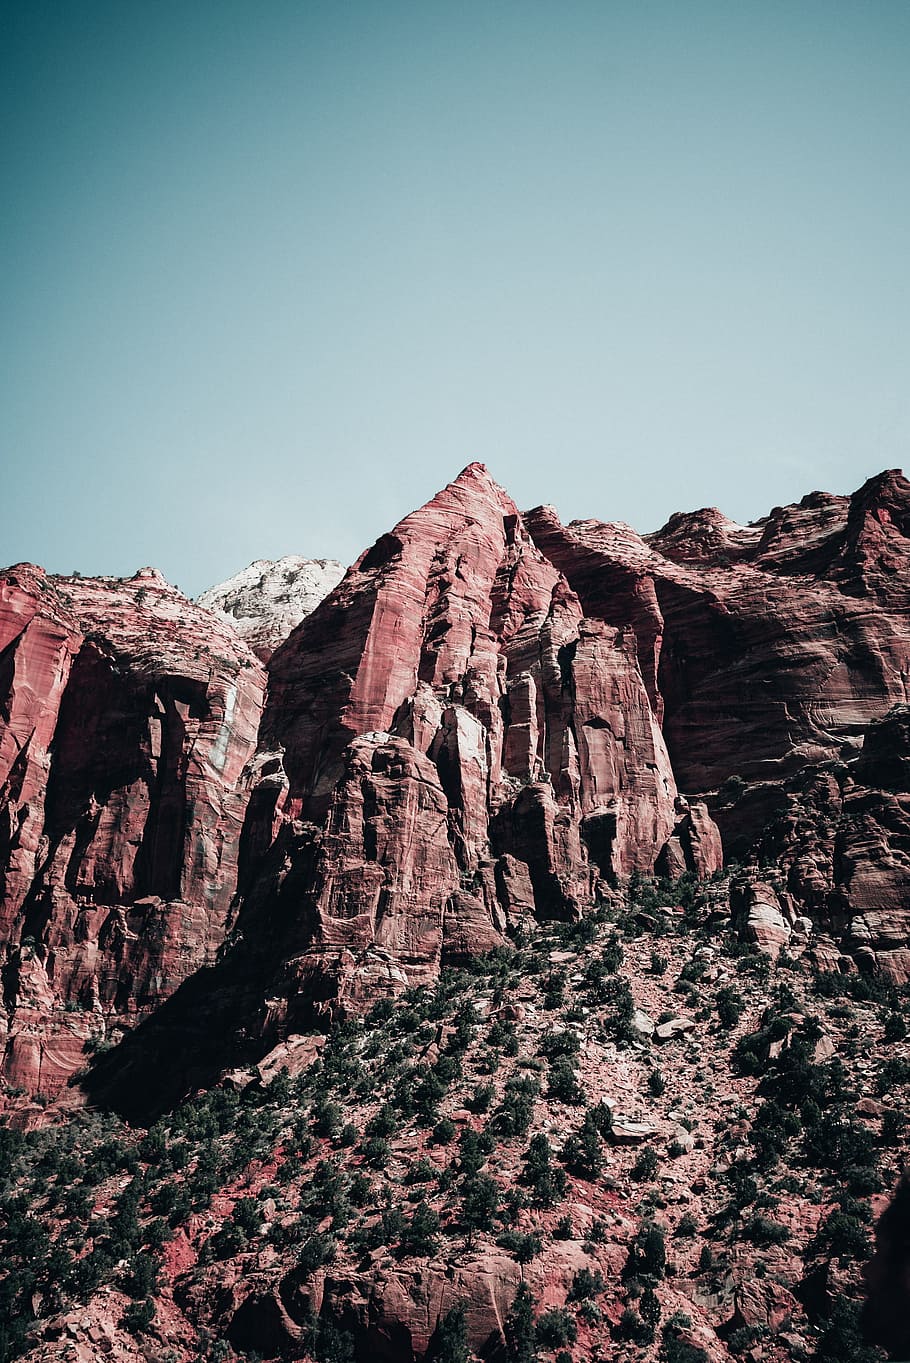 grande, picos de arenito do desfiladeiro, claro, brilhante, luz solar, Aventura, Arizona, Canyon, Deserto, Erosão